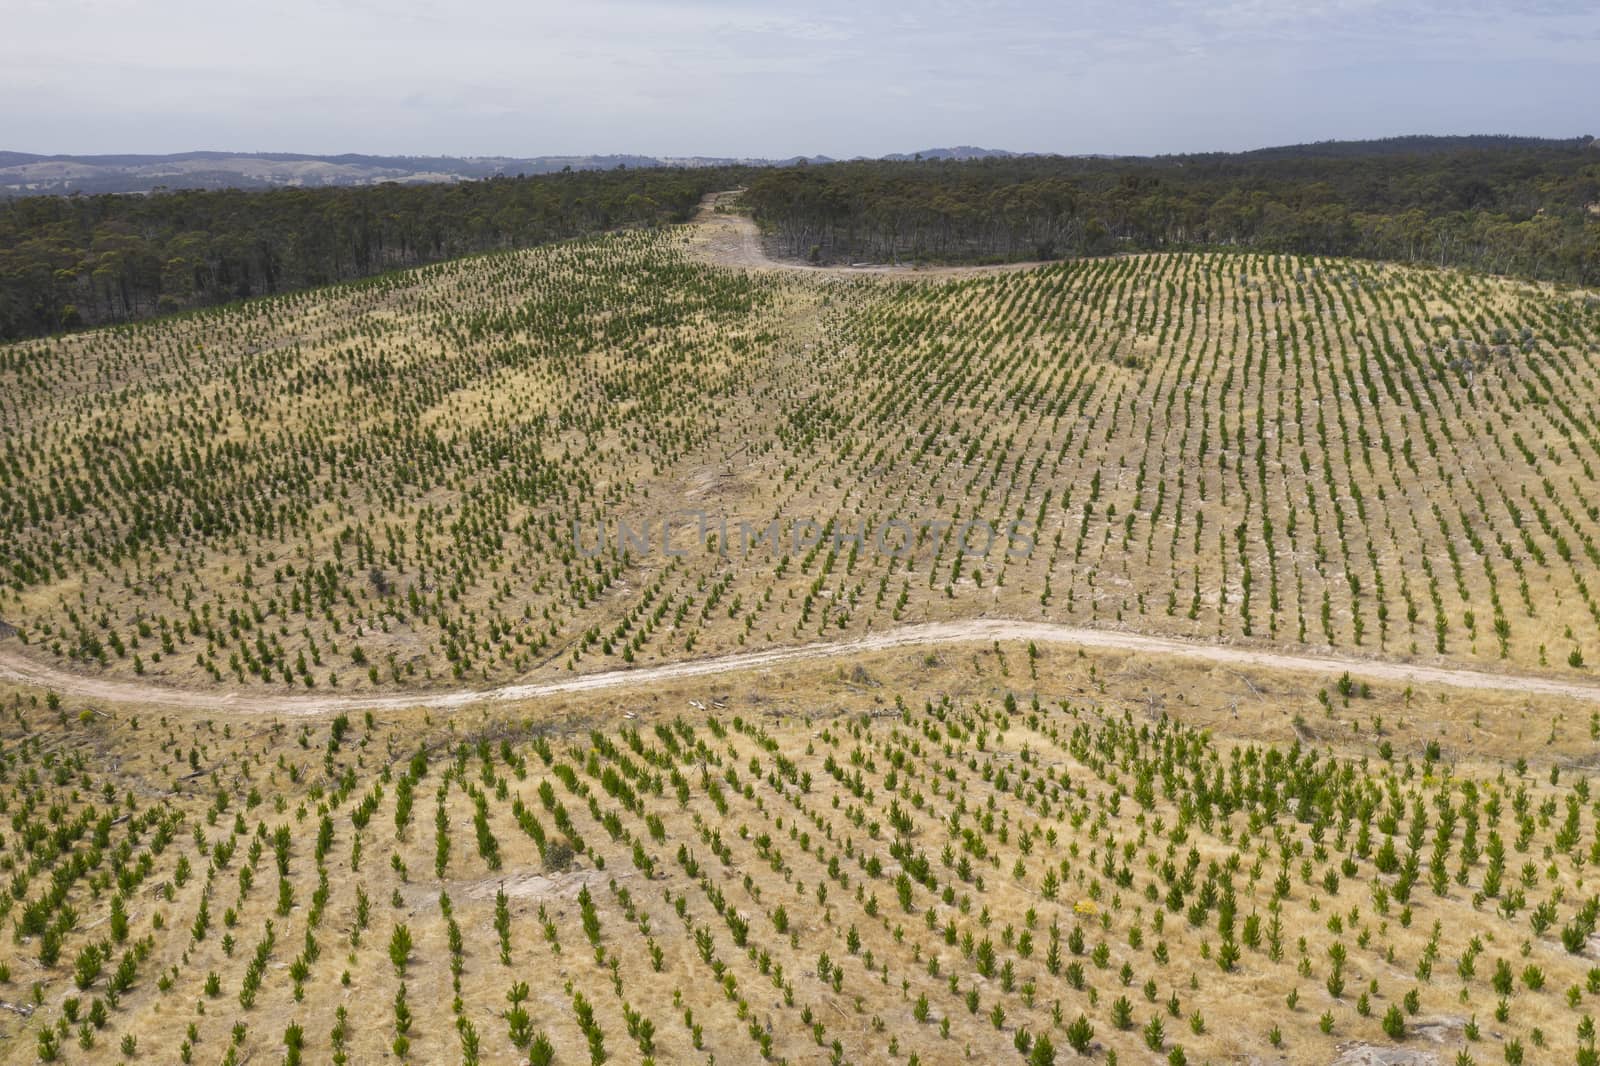 Aerial view of a pine tree farm in regional South Australia